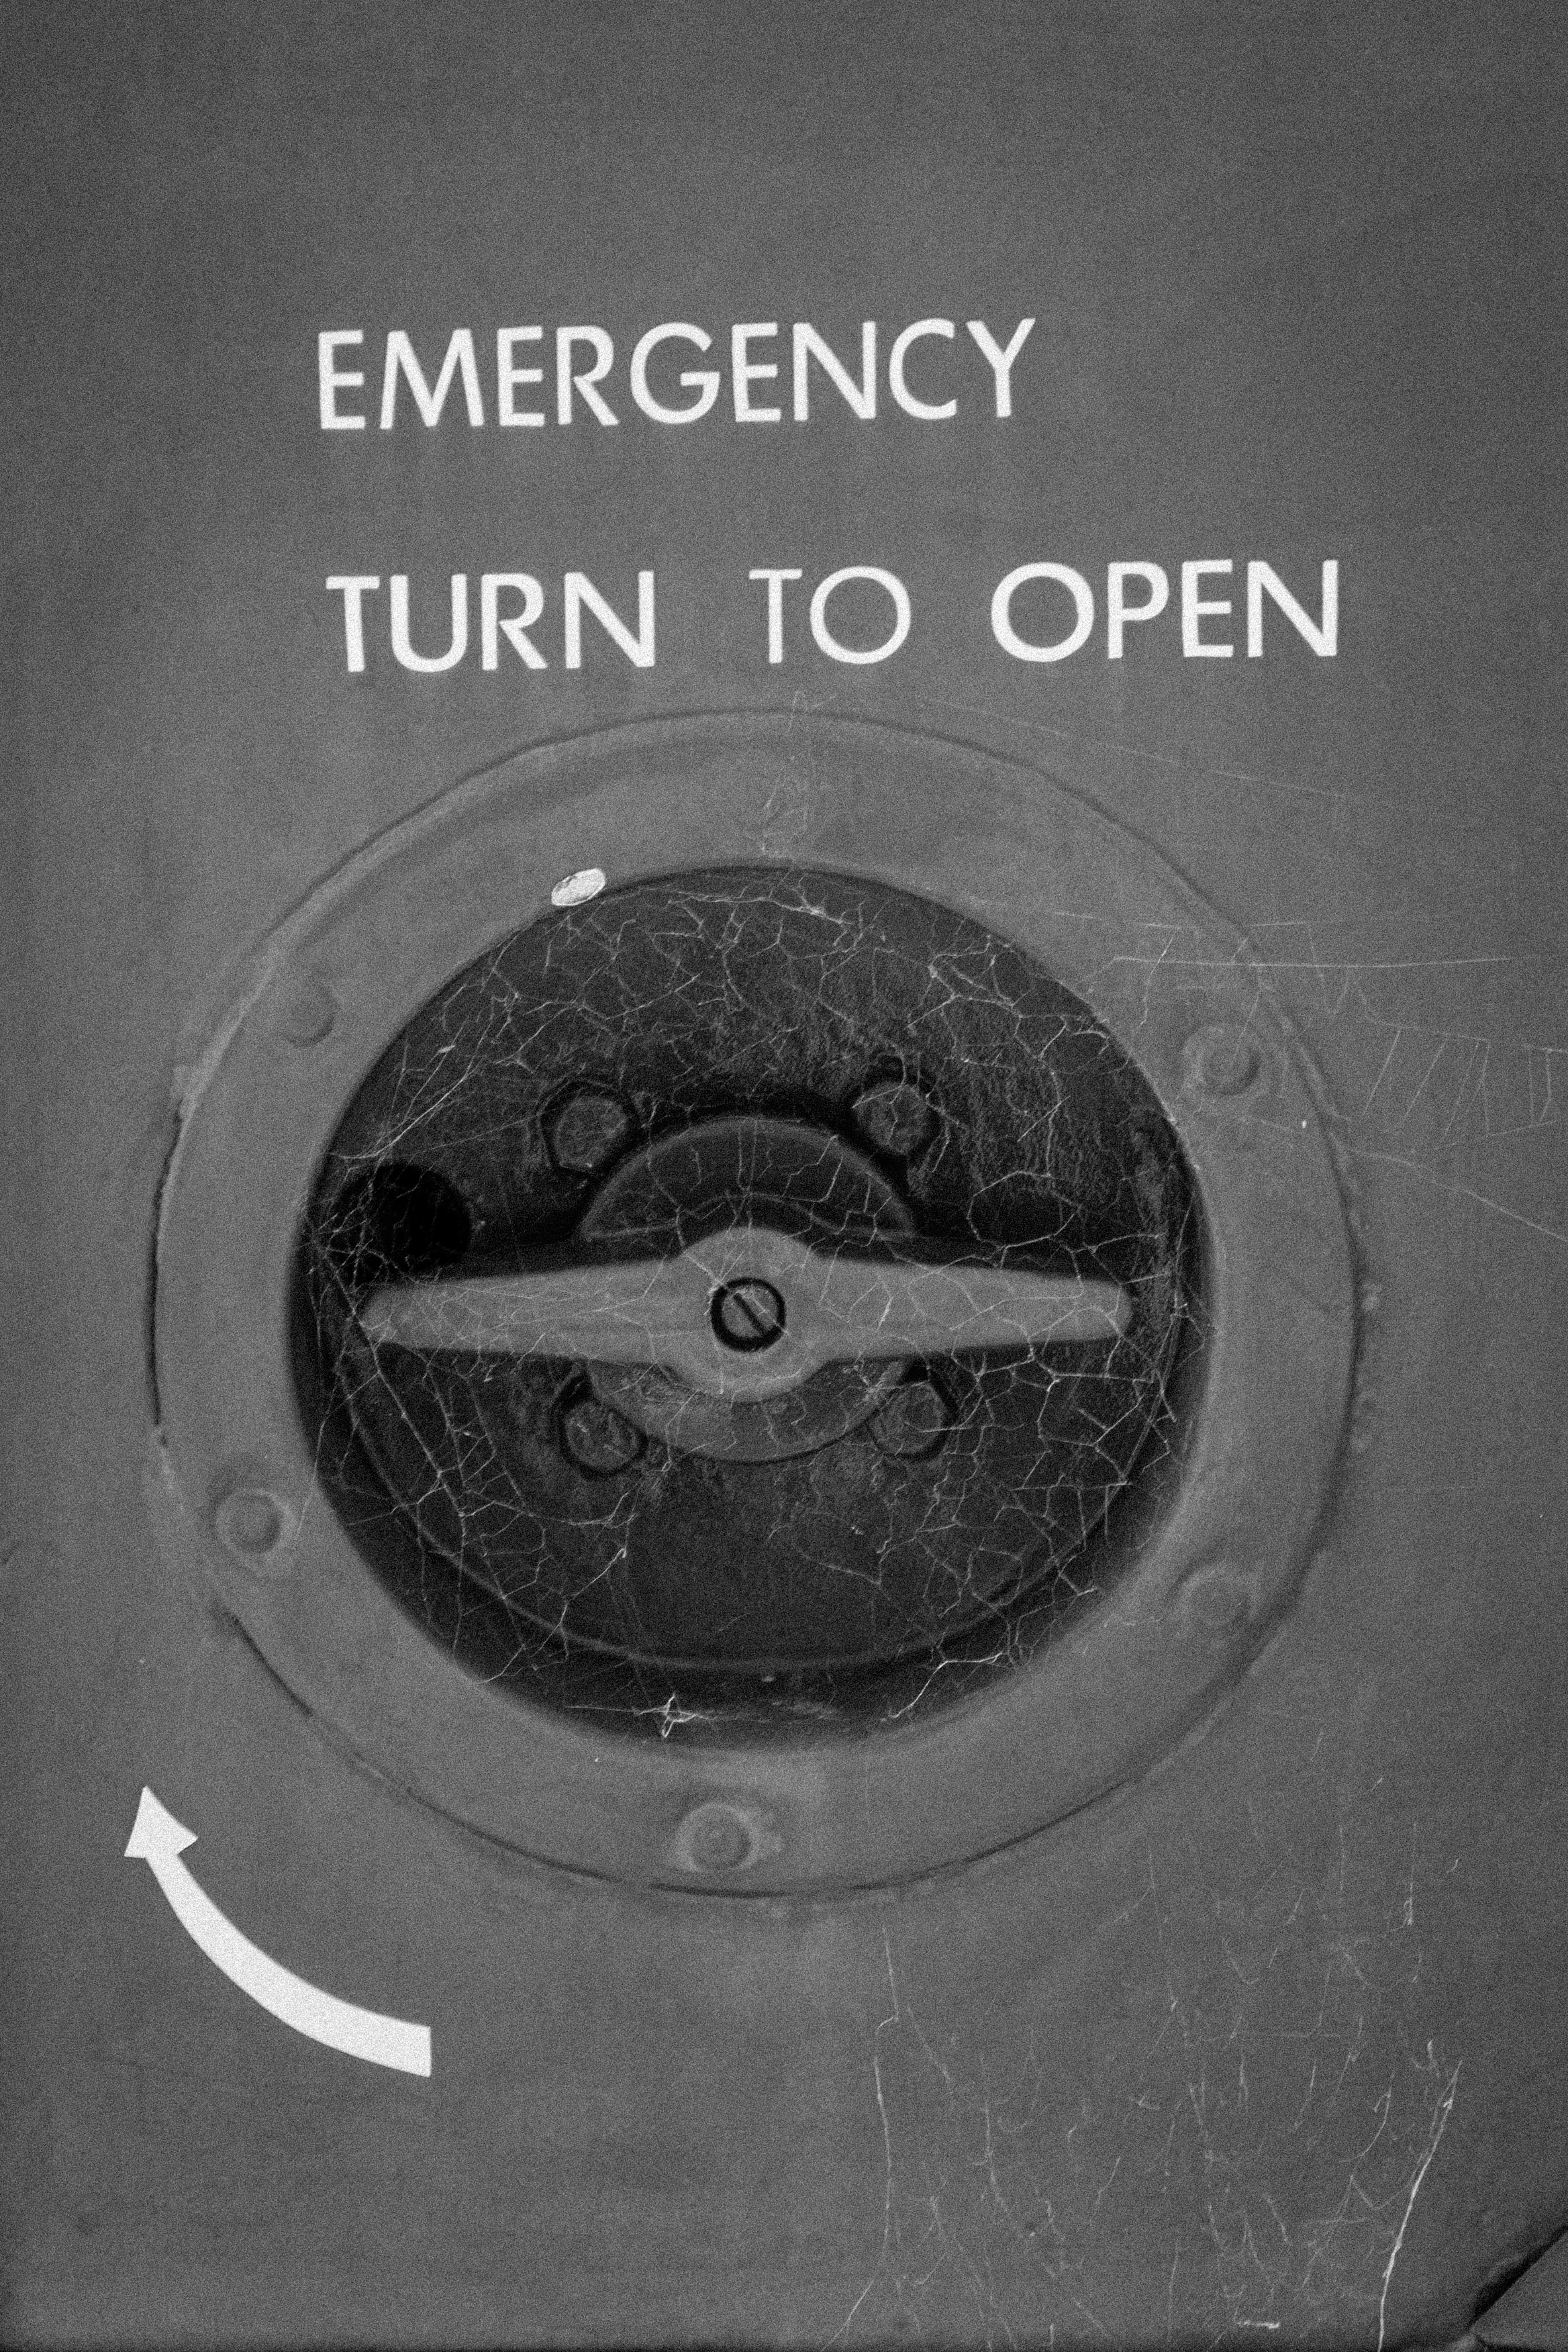 emergency - turn to open from old bus door